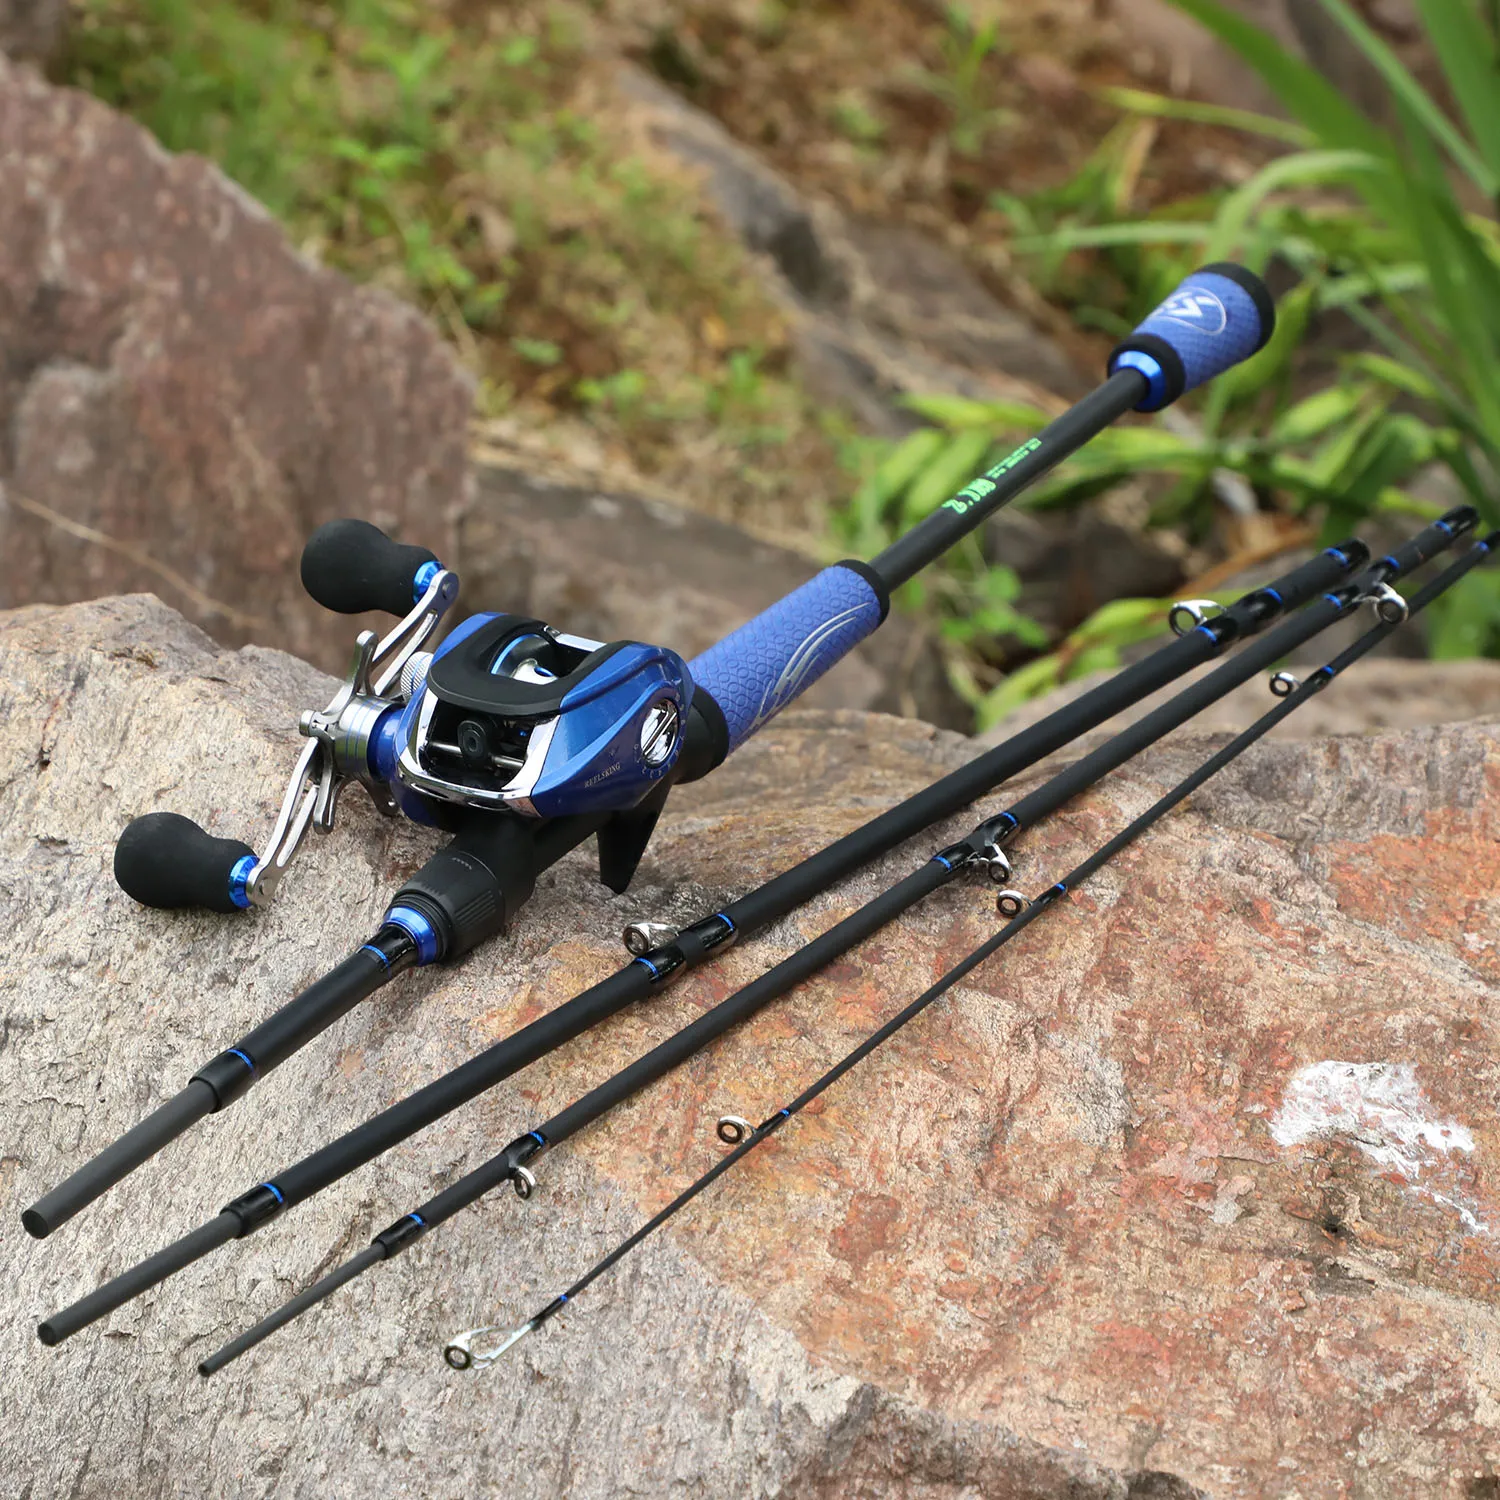 

Sougayilang 1.8m 2.1m 2.4m Portable 4 Section Carbon Fiber Casting Fishing Rod with 17+1BB Baitcasting Reel Fishing Combo Pesca